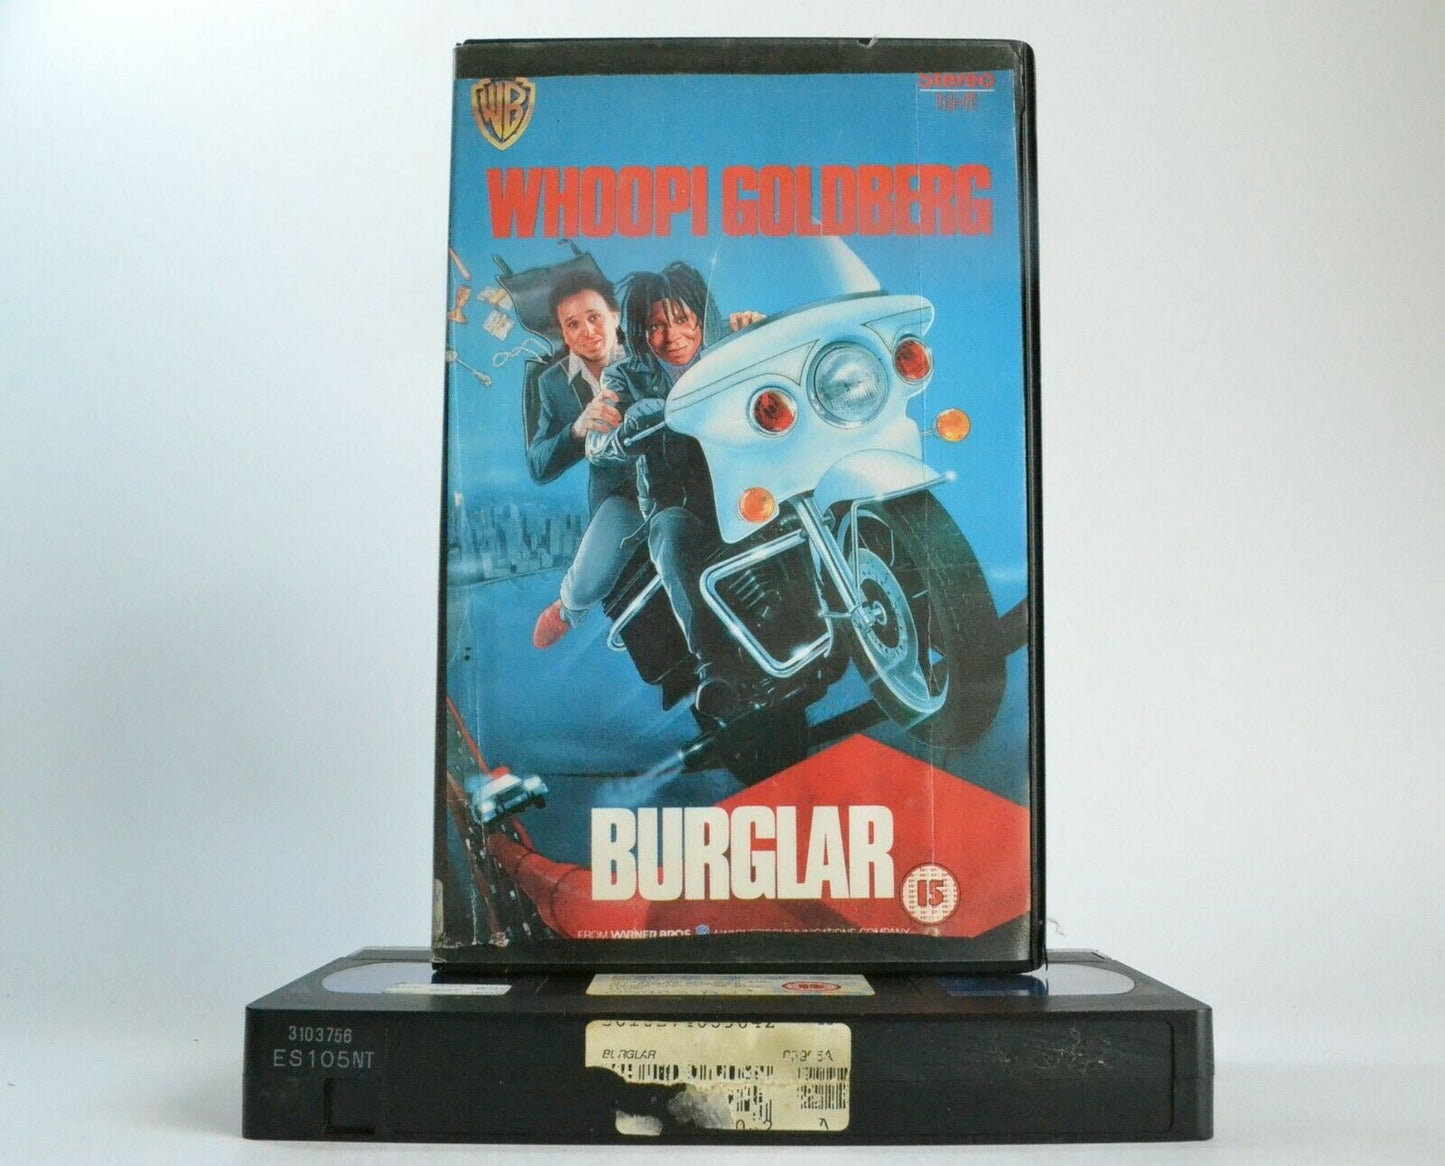 Burglar - Crime Comedy - Large Box - Whoopi Goldberg/Bobcat Goldthwait - Pal VHS-